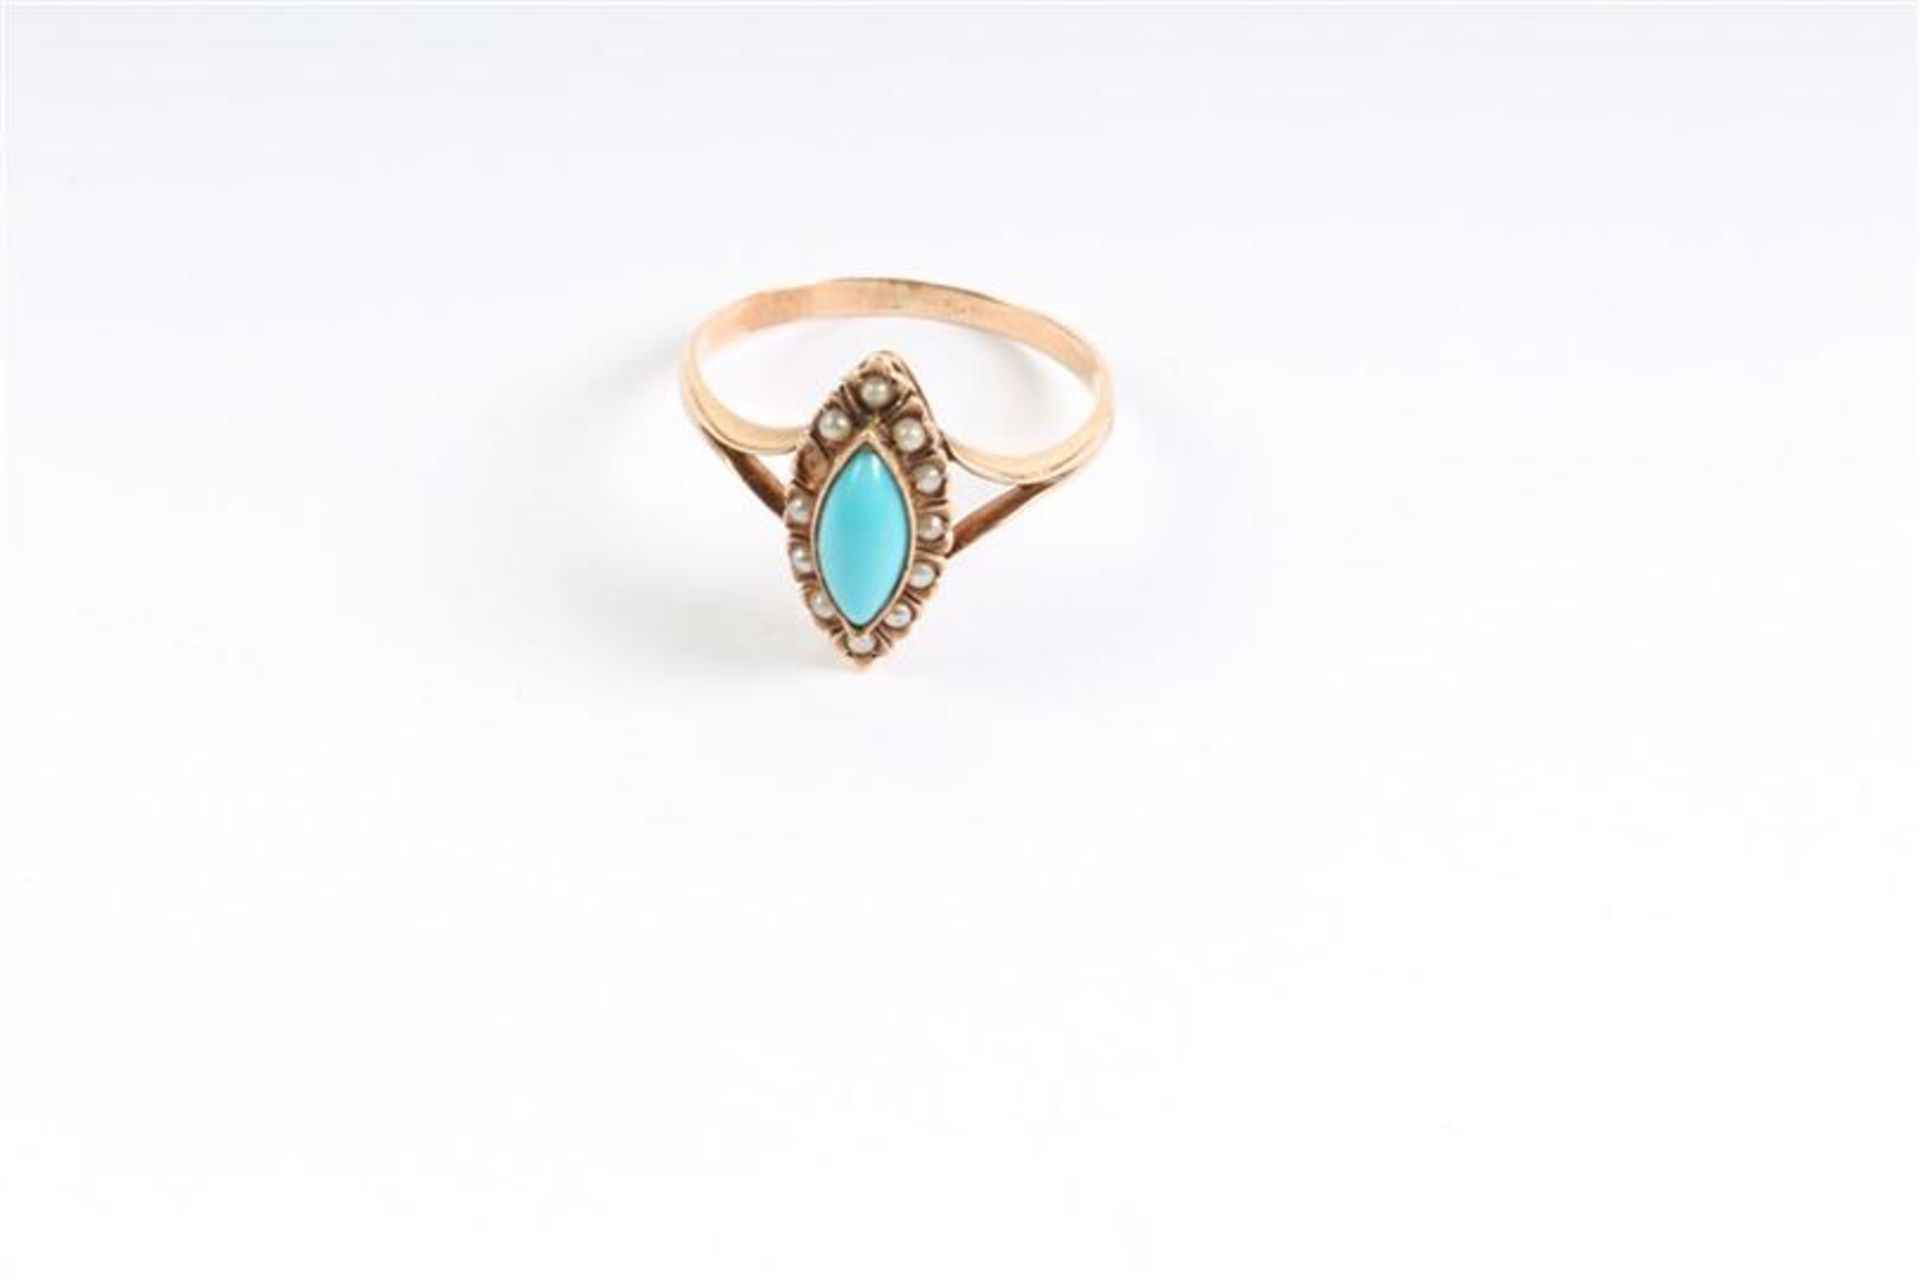 Gouden ring met turquoise en zaadparels, 1 manco, Hollands gekeurd. Gewicht: 1.7 g. Ringmaat: 16.5.